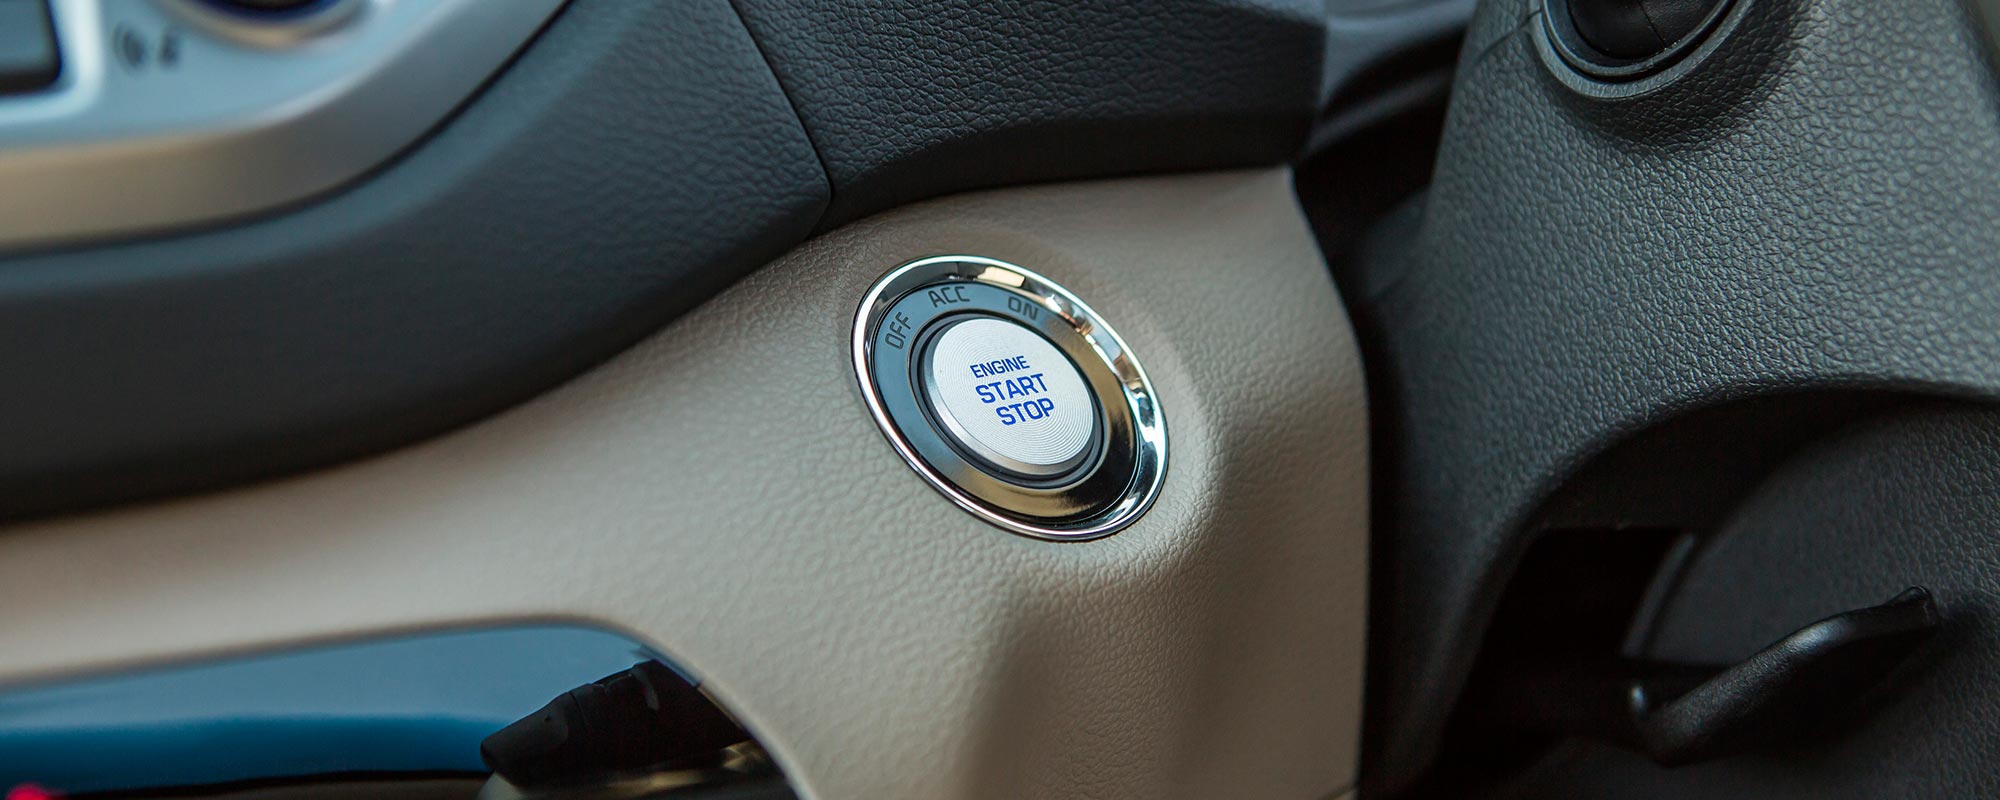 Hyundai Tucson Elite engine start and stop button view